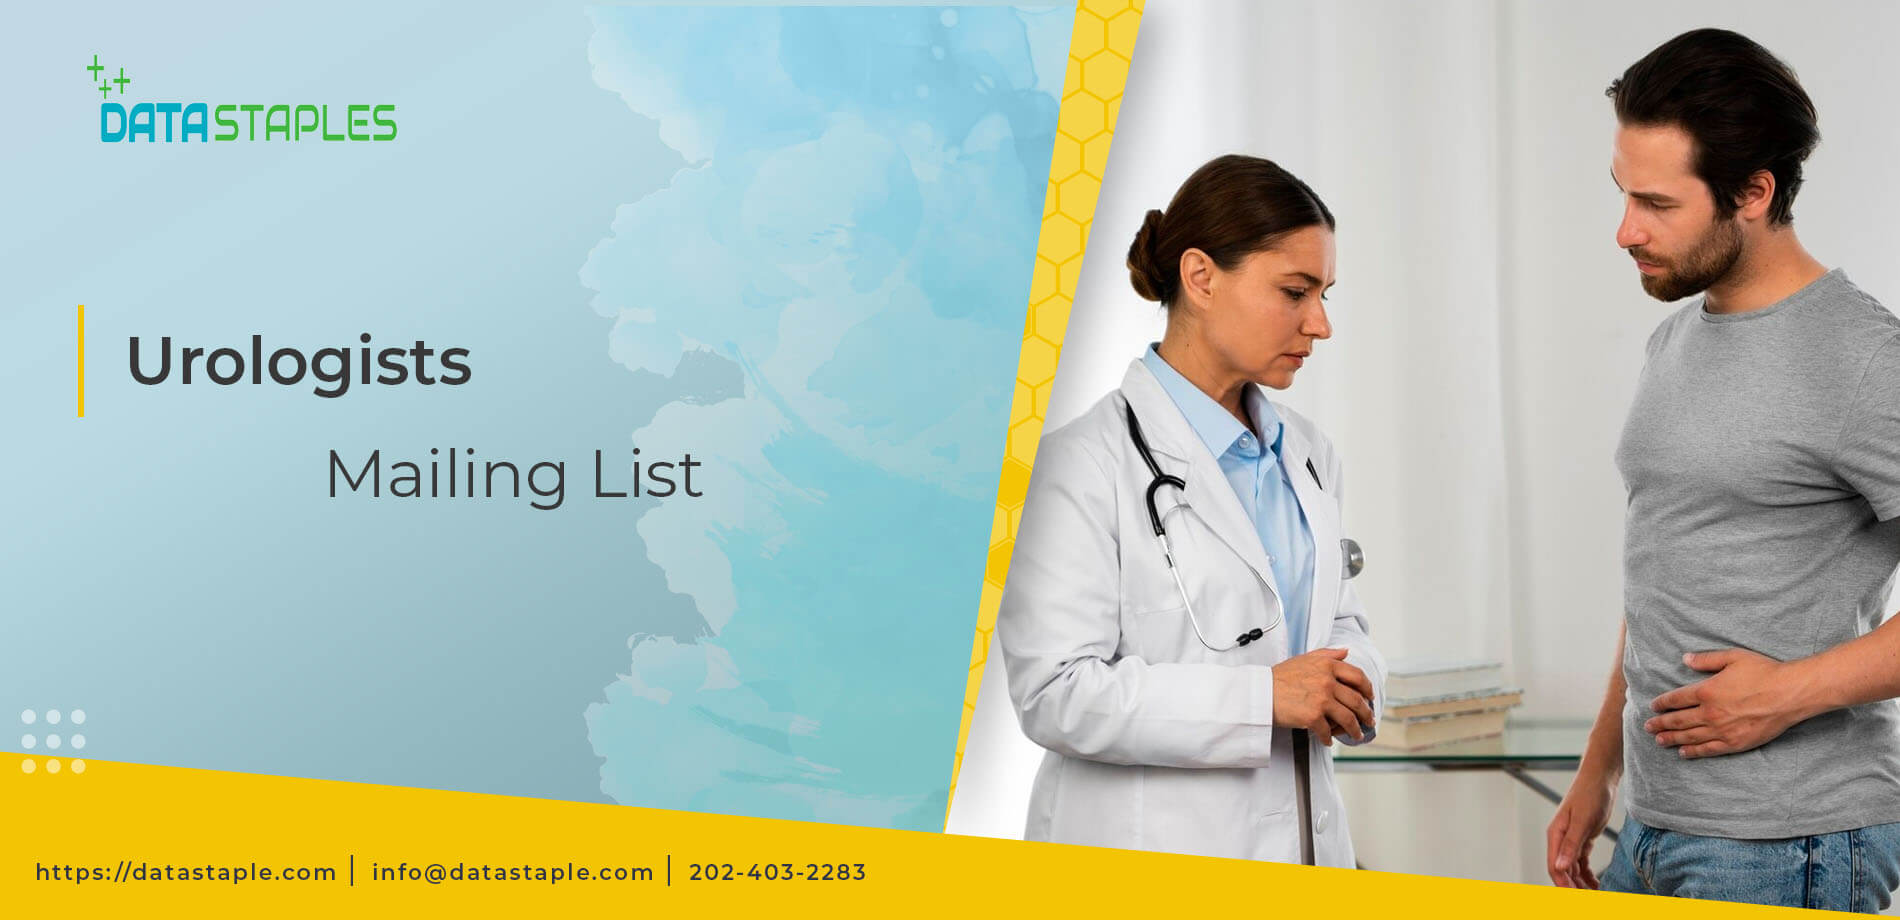 Urologists Mailing List | DataStaples